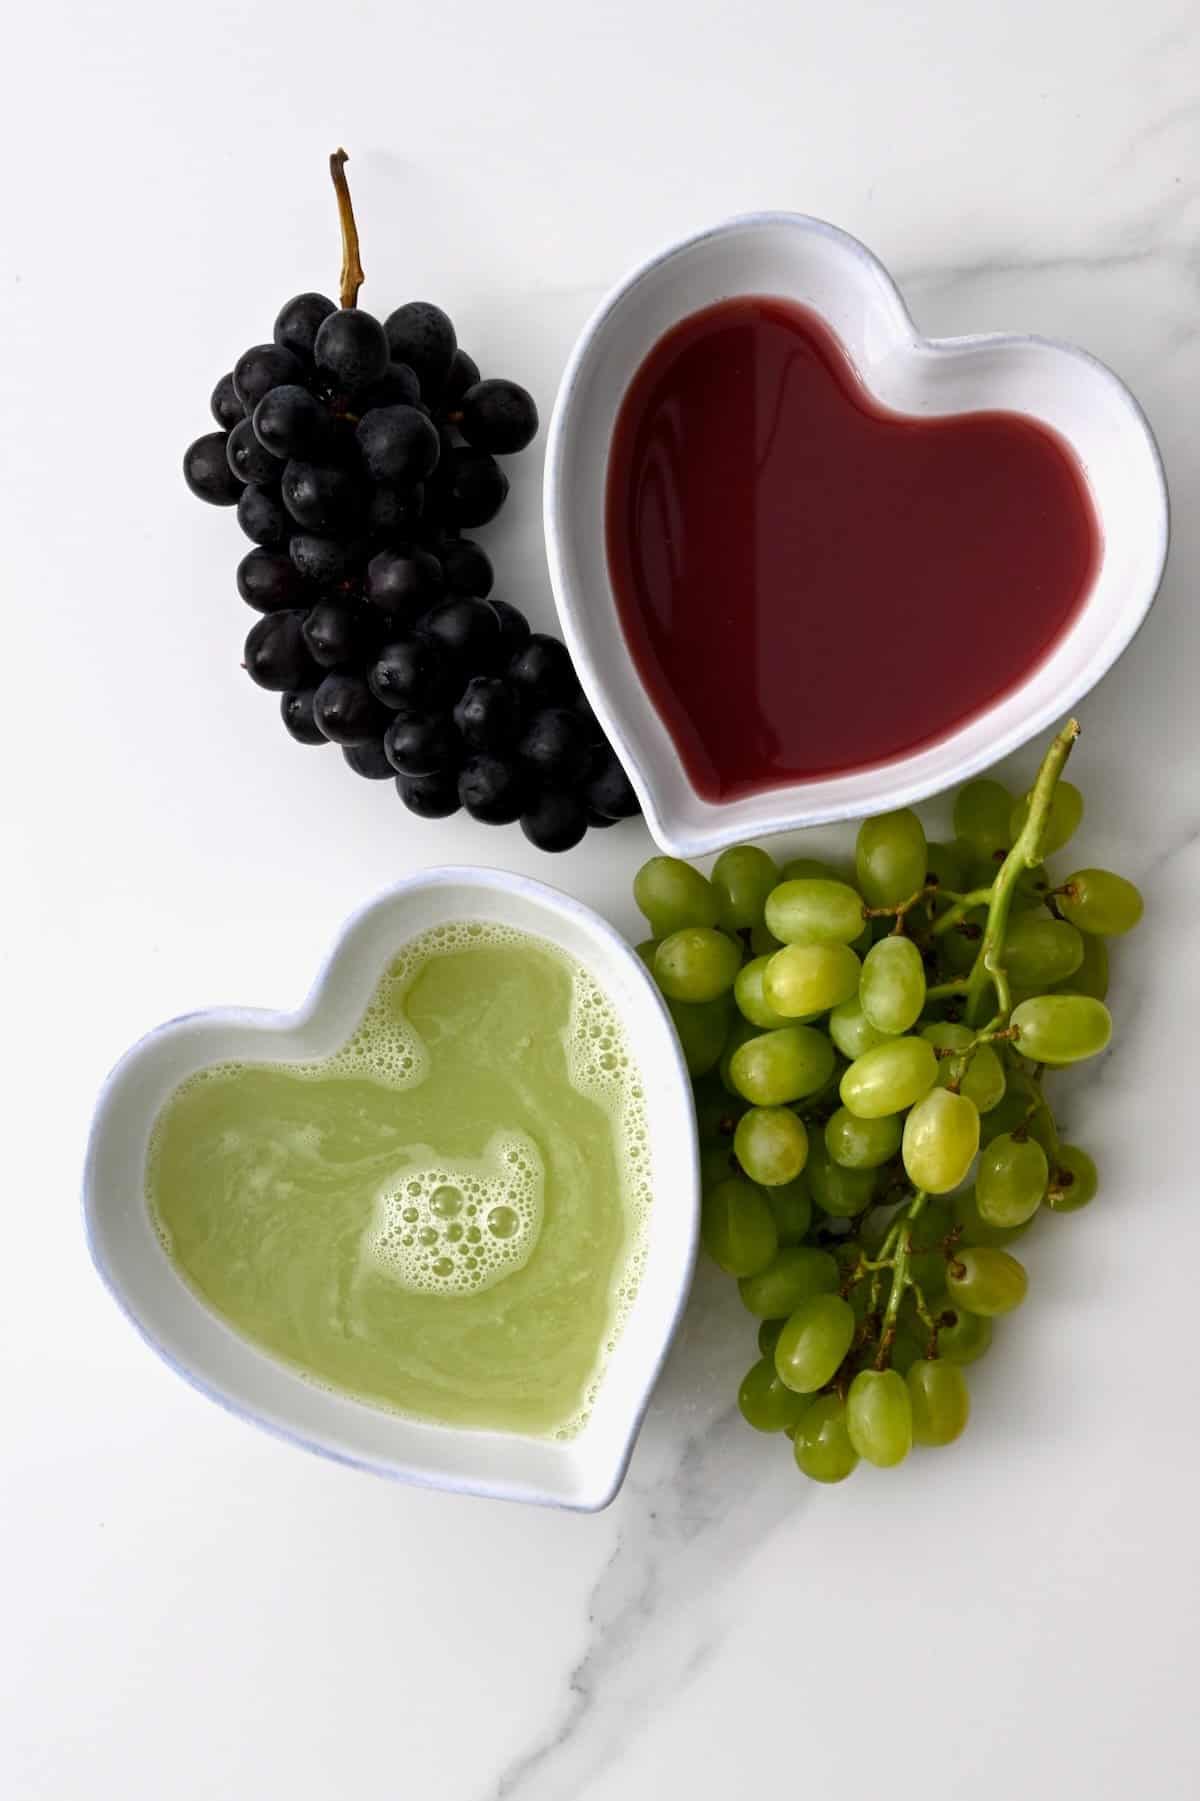 Black grapes, a bowl of red grape juice, a bowl of green grape juice, and green grapes